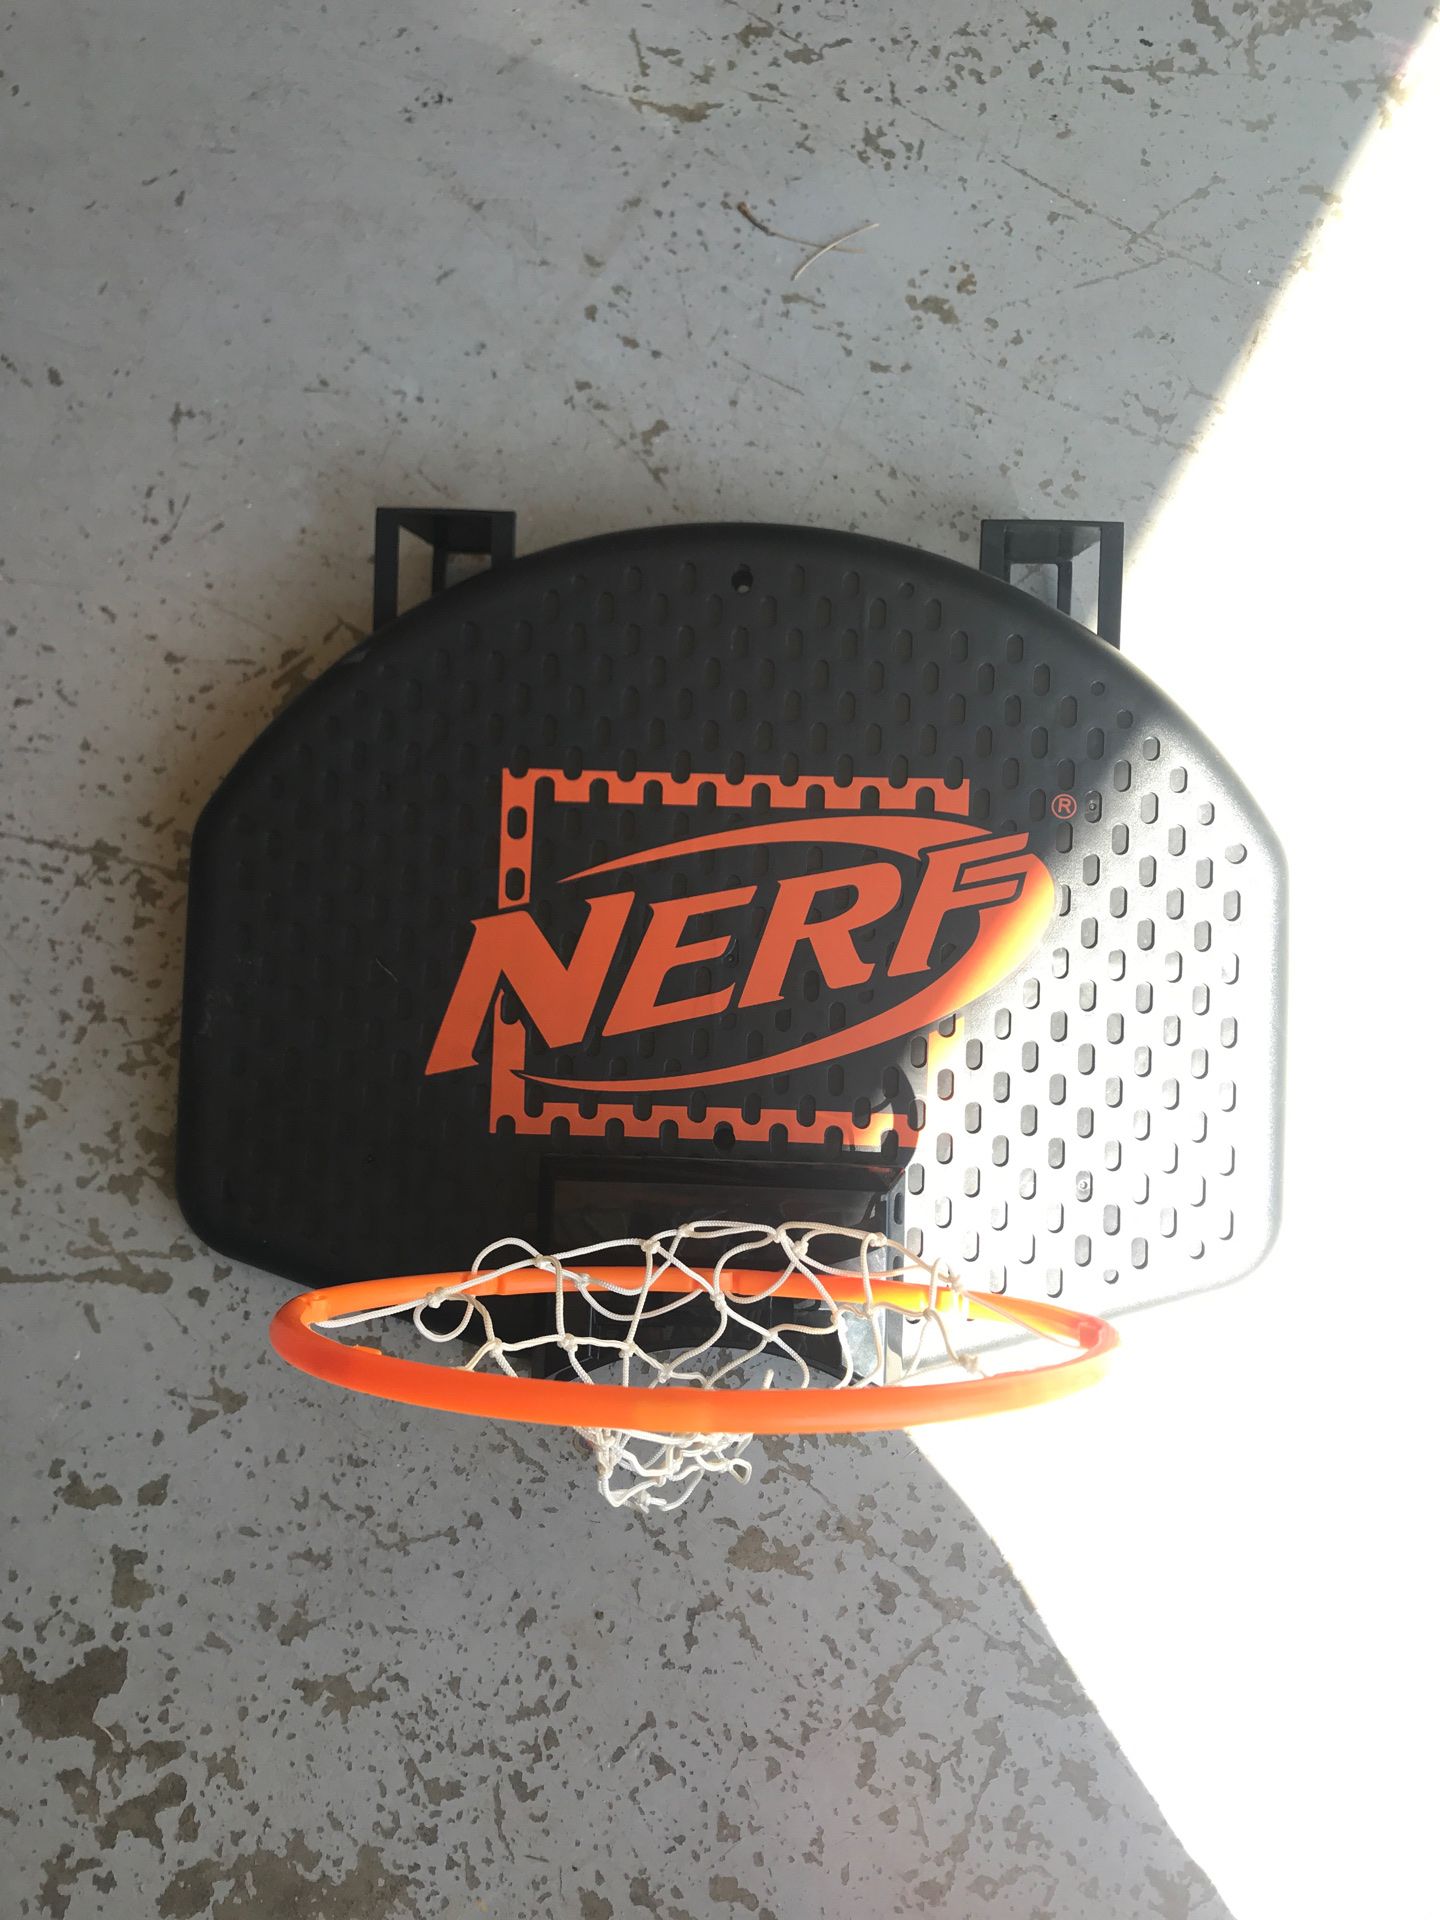 Nerf basketball hoop